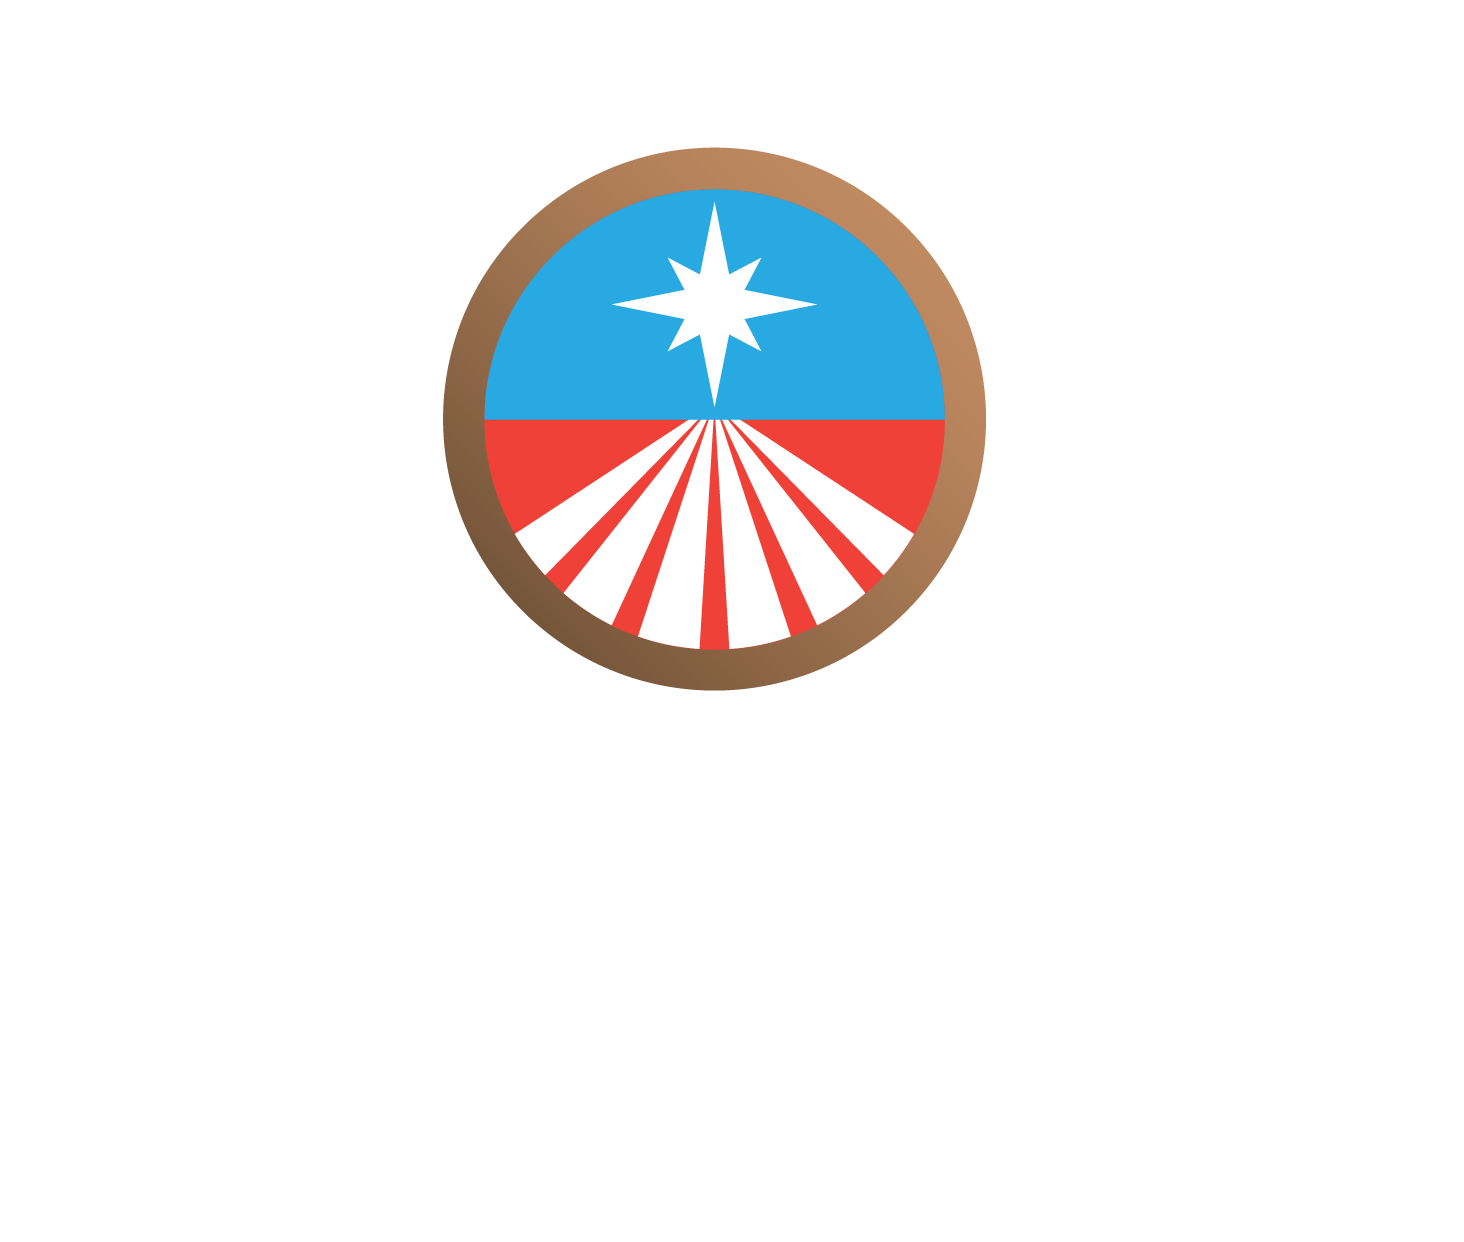 The Veteran Code of Conduct